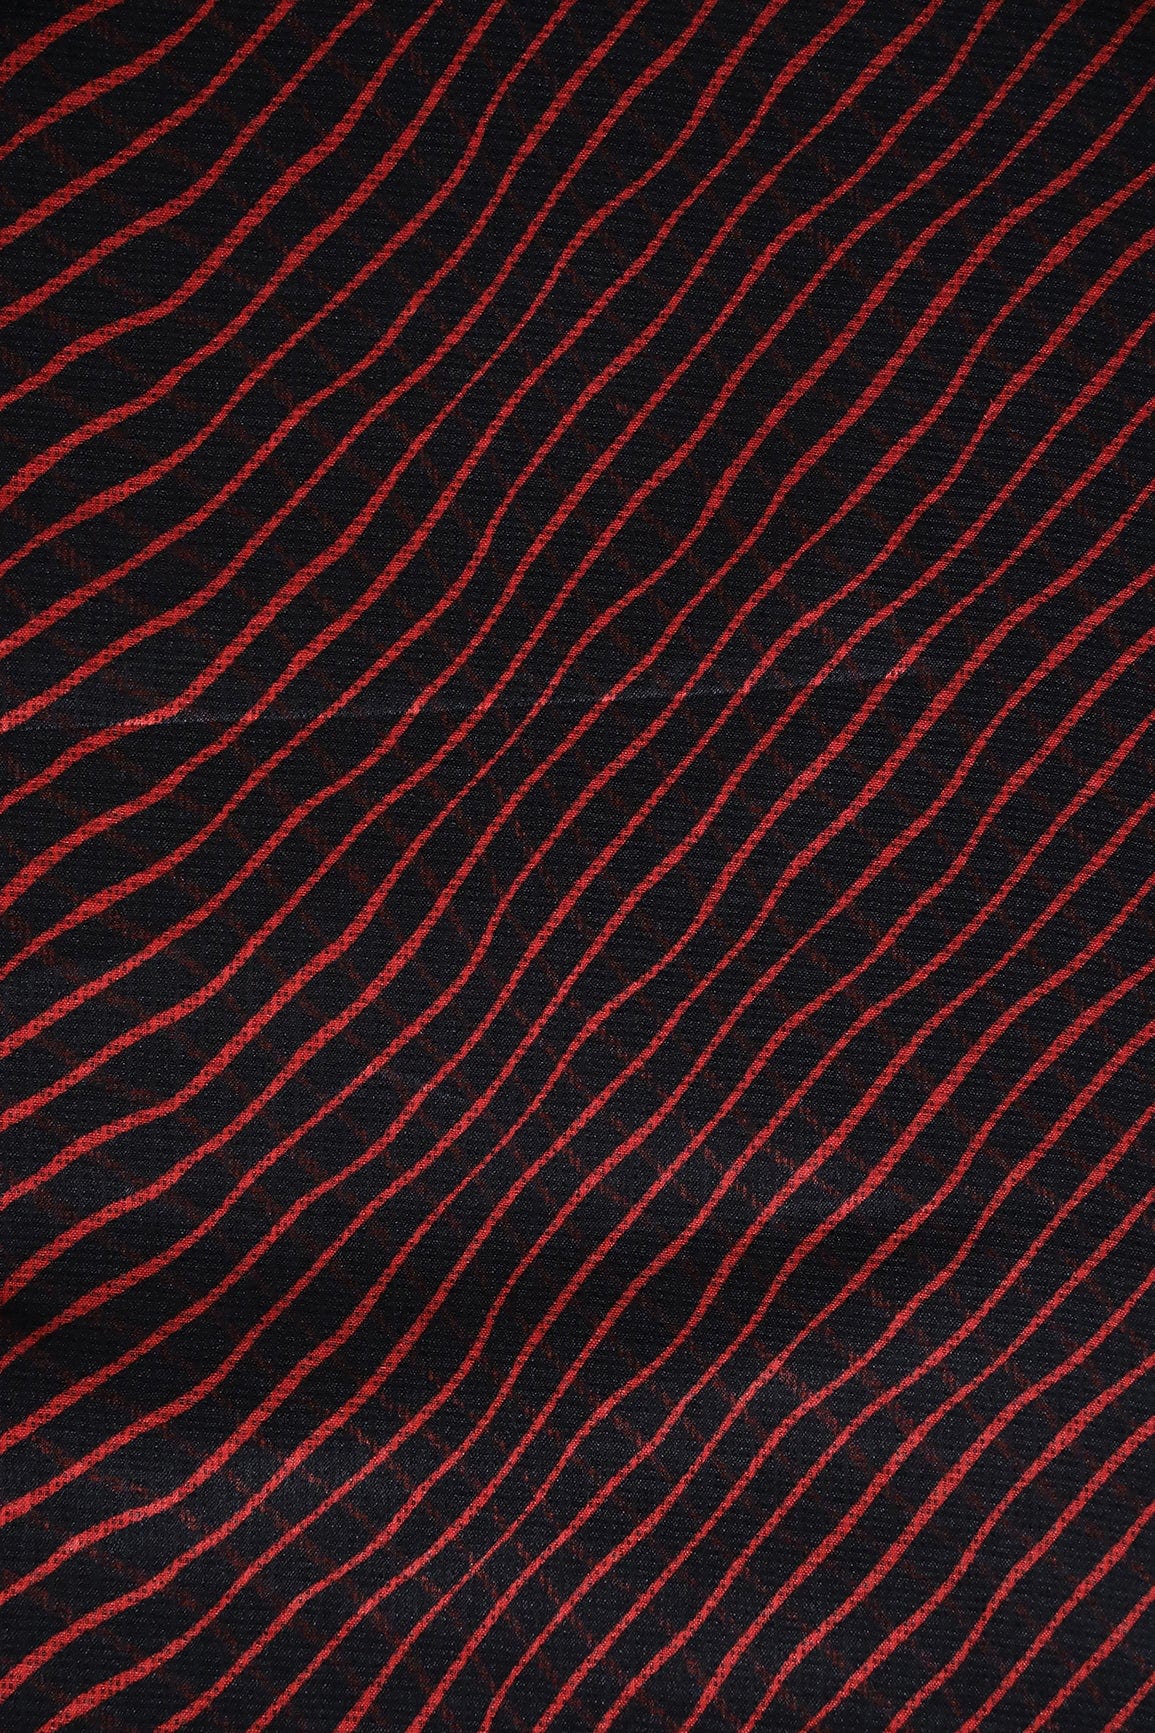 doeraa Prints Red And Black Leheriya Print On Kota Doria Fabric